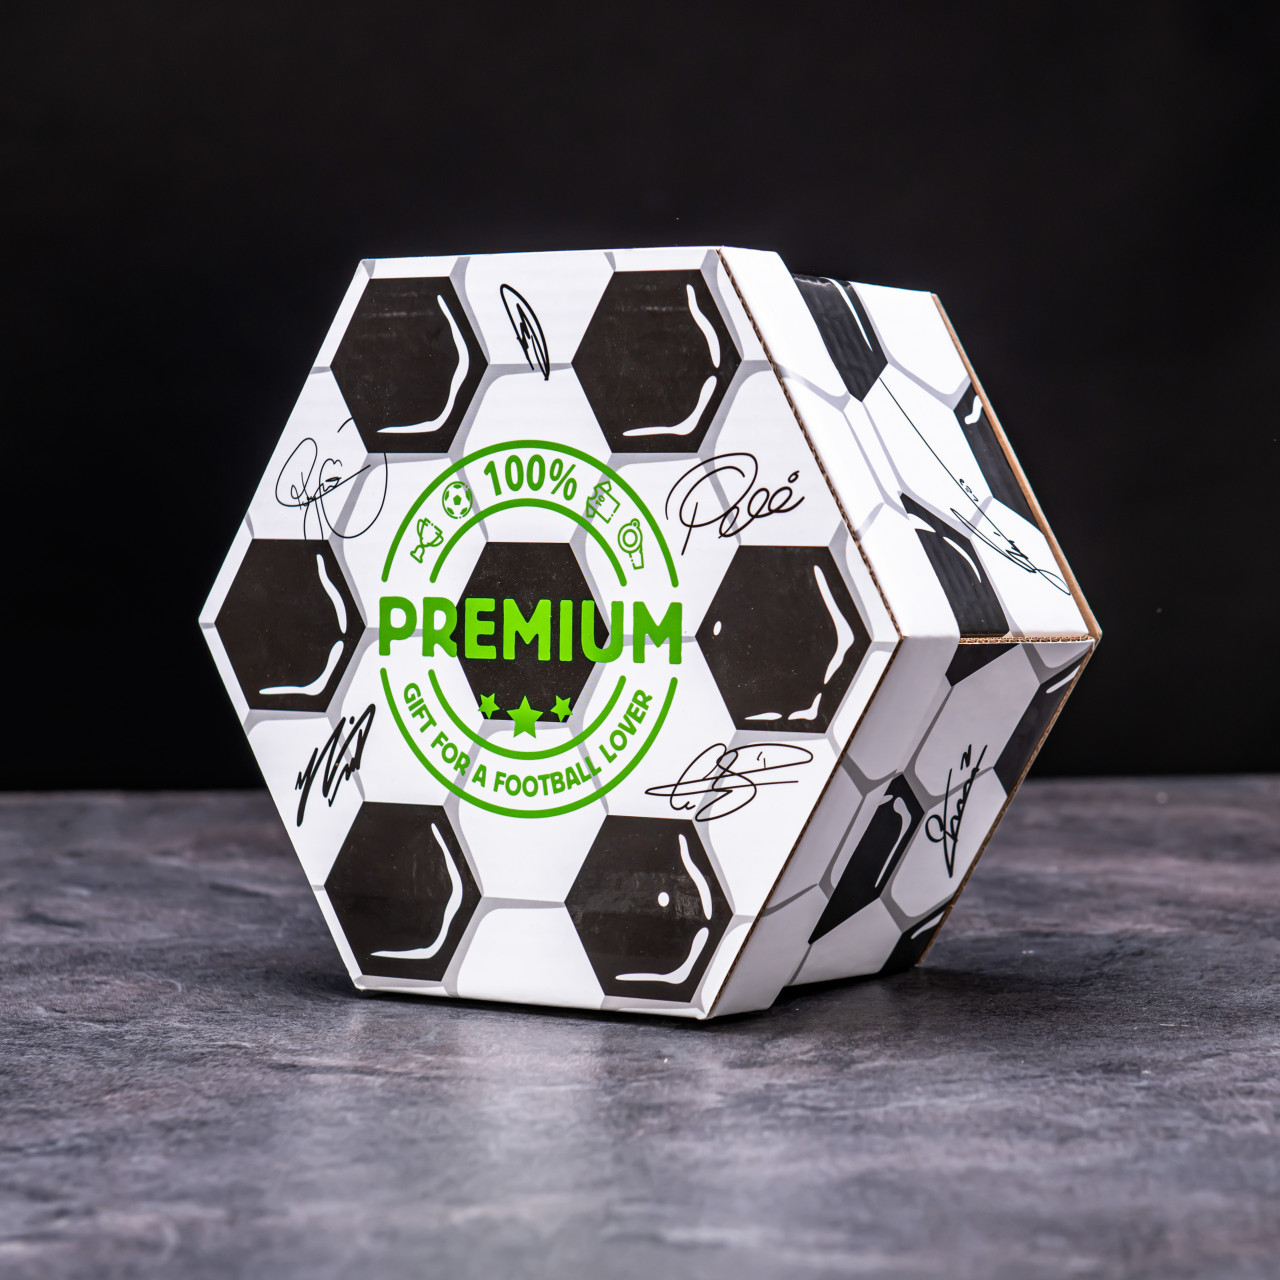 Hexagon plný kvalitní kosmetiky Lemon Grass - Fotbalový